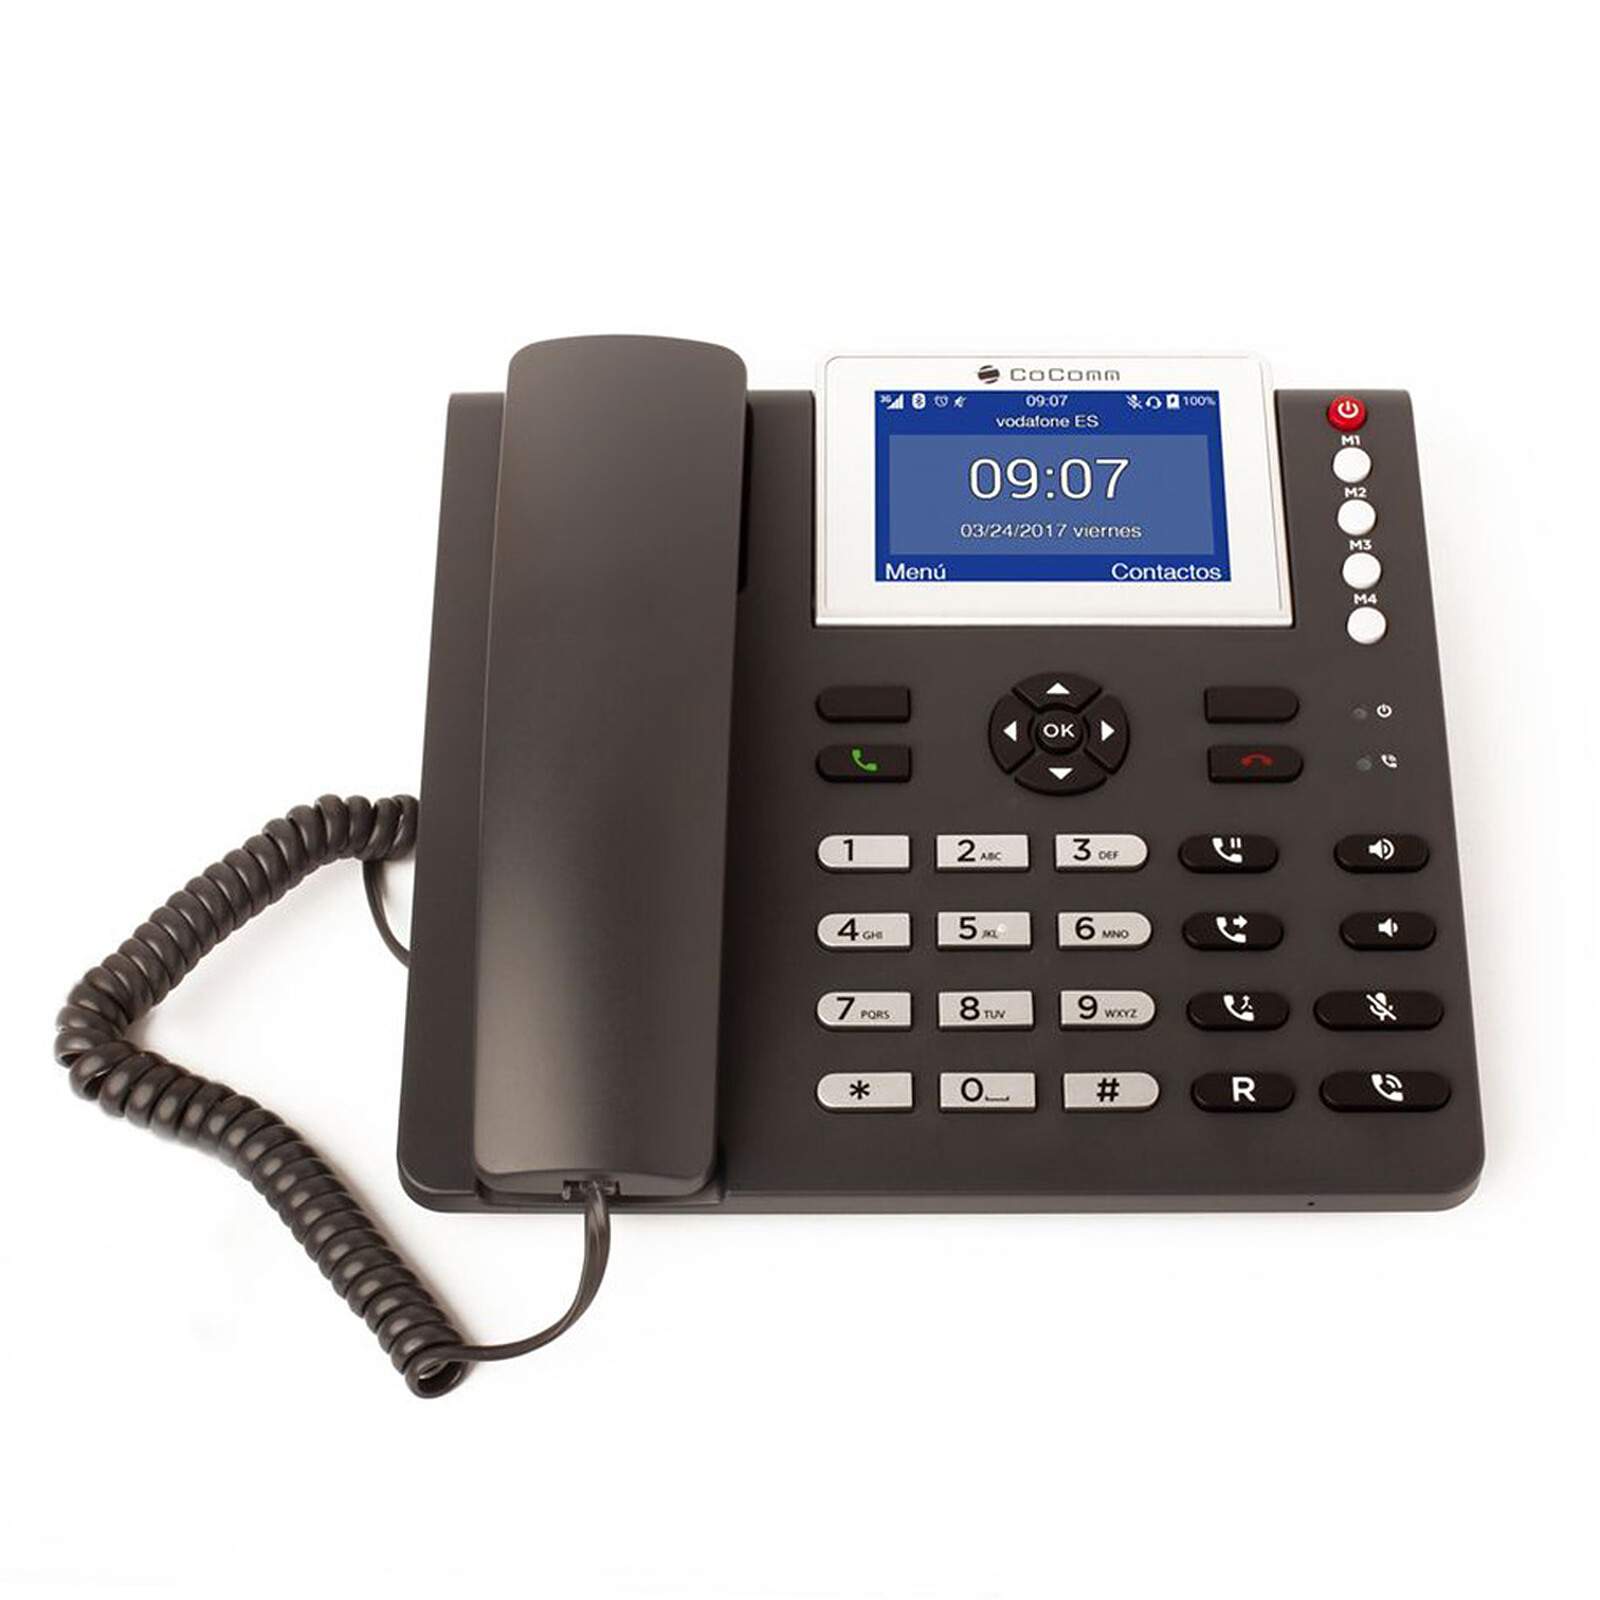 Telefono IP Cisco 6821 - Telefonia VoIP - Garanzia 3 anni LDLC